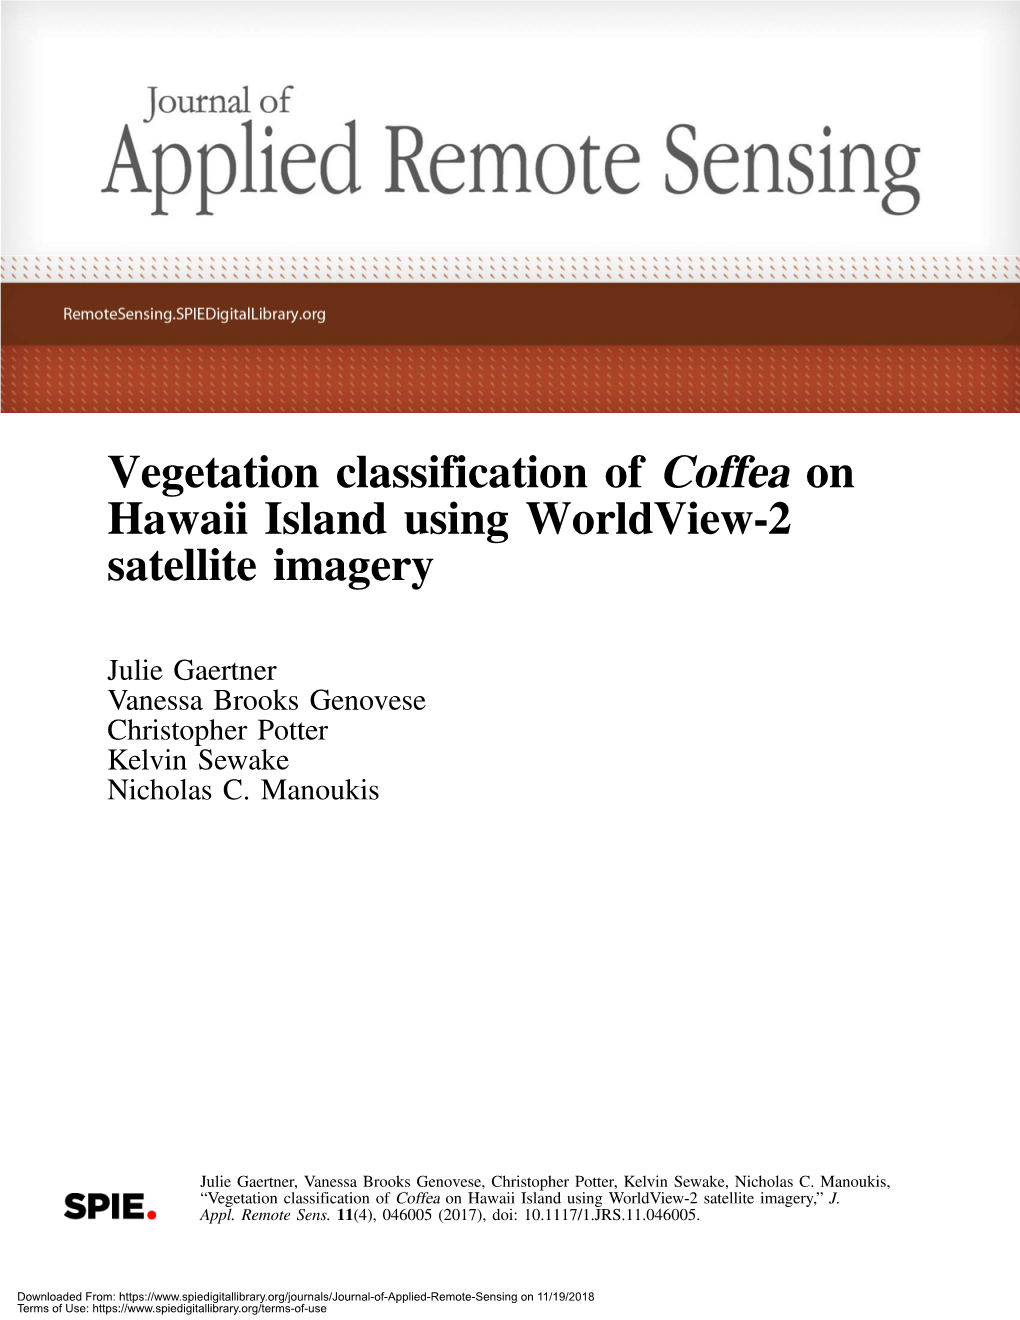 Vegetation Classification of Coffea on Hawaii Island Using Worldview-2 Satellite Imagery